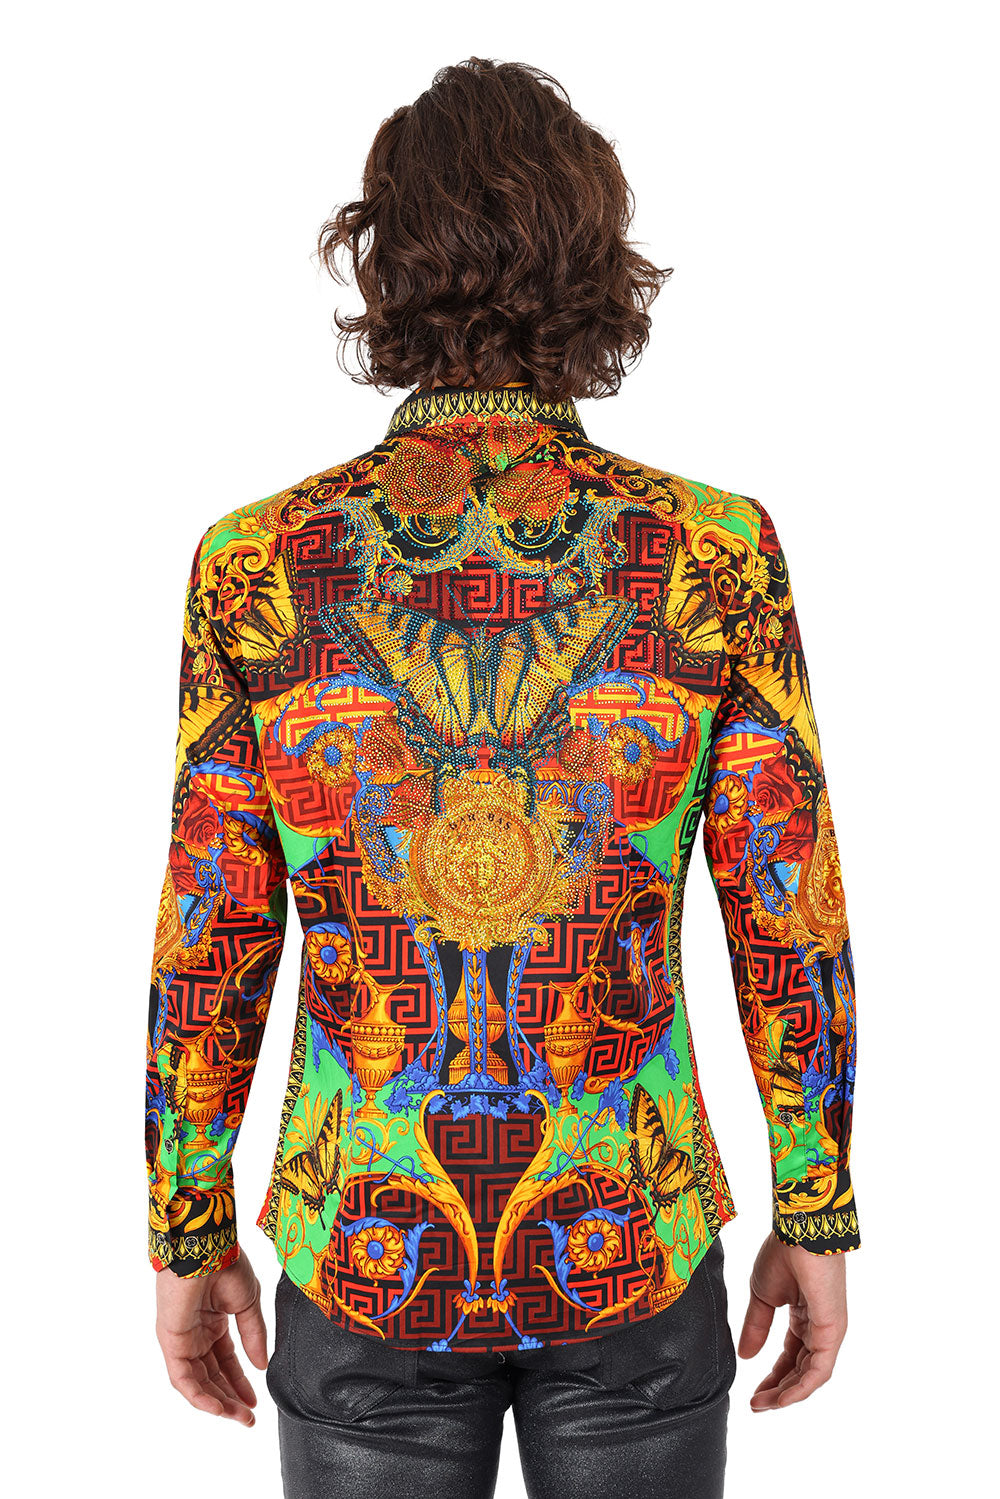 BARABAS Men's Rhinestone Medusa Floral Baroque Butterfly Shirt 2SPR223 Multi